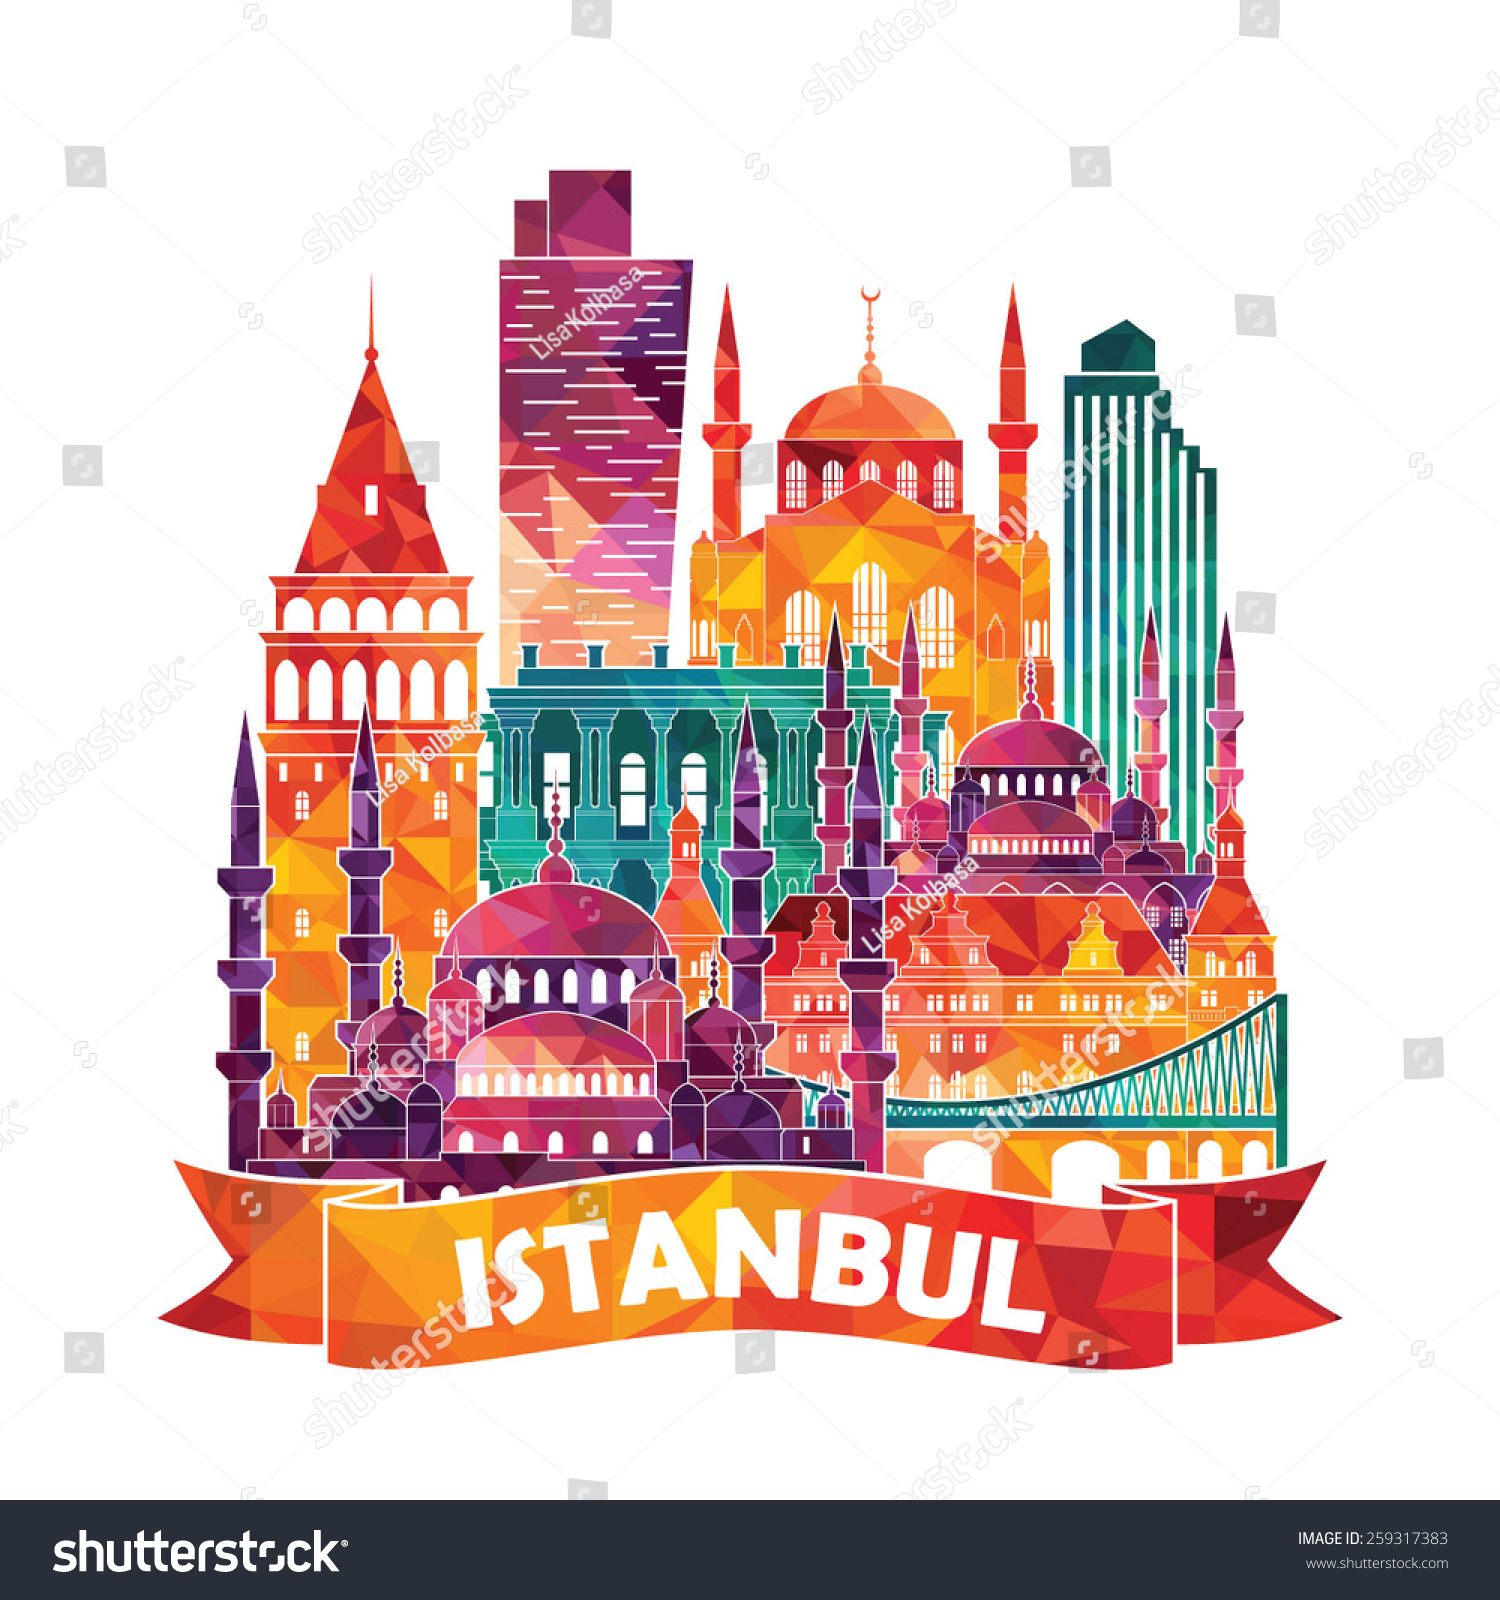 Istanbul Detailed Silhouette Vector Illustration Stock Vector 259317383 - Shutterstock1500 x 1600